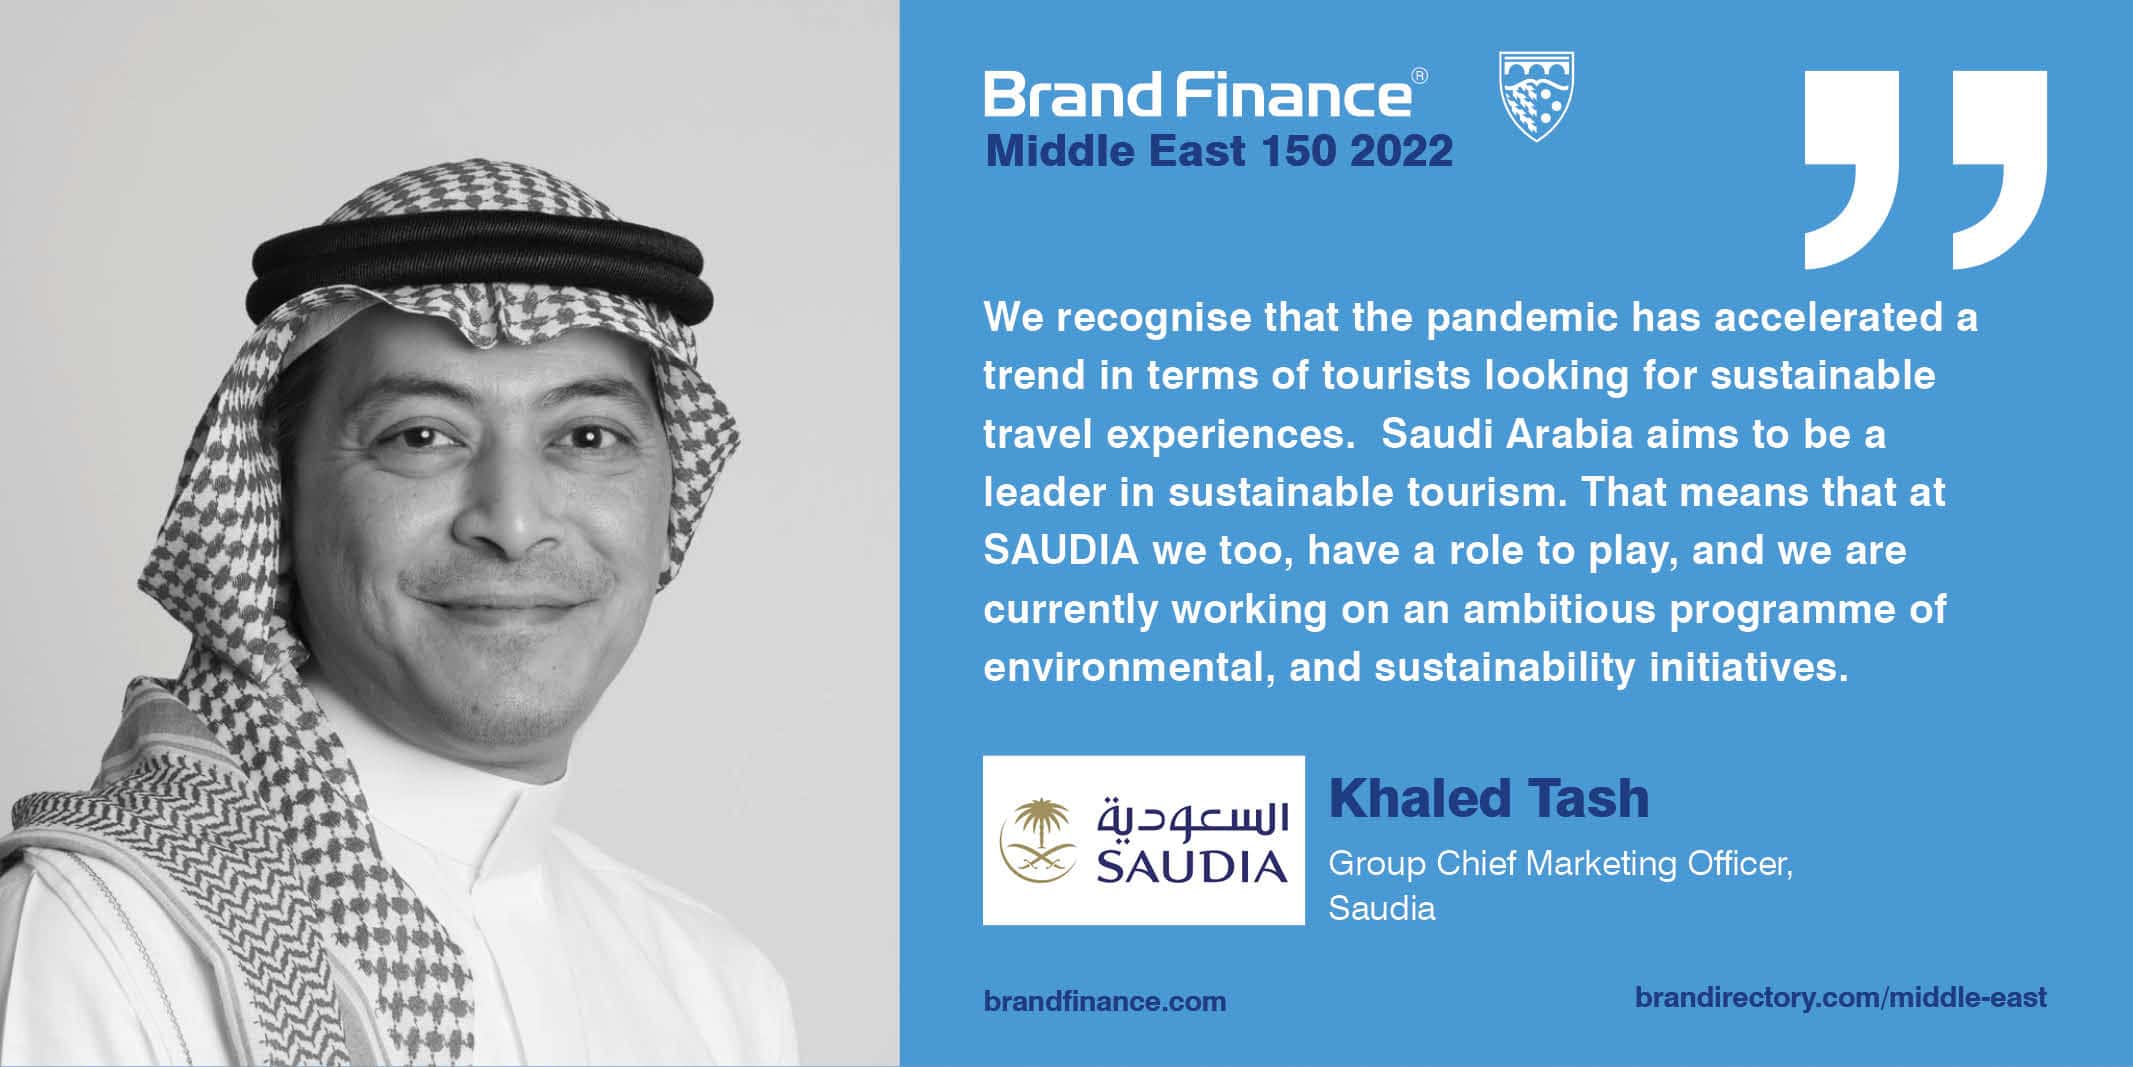 Khaled Tash, Group Chief Marketing Officer, SAUDIA